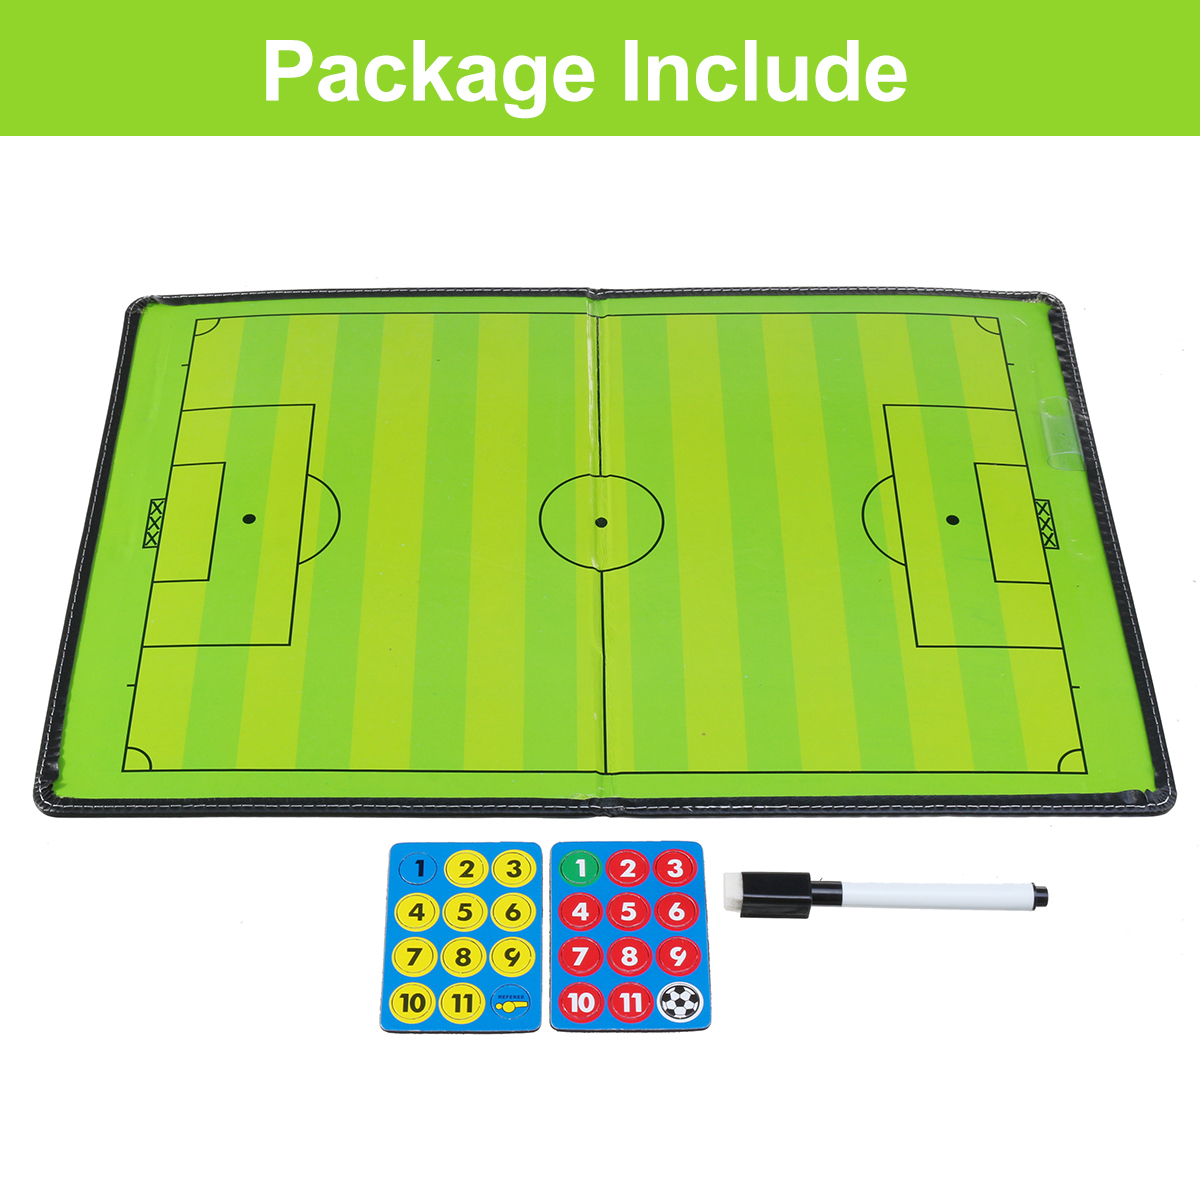 44x32cm-Foldable-Magnetic-Coaching-Training-Board-Tactical-Soccer-Football-Teaching-Kit-1630350-5